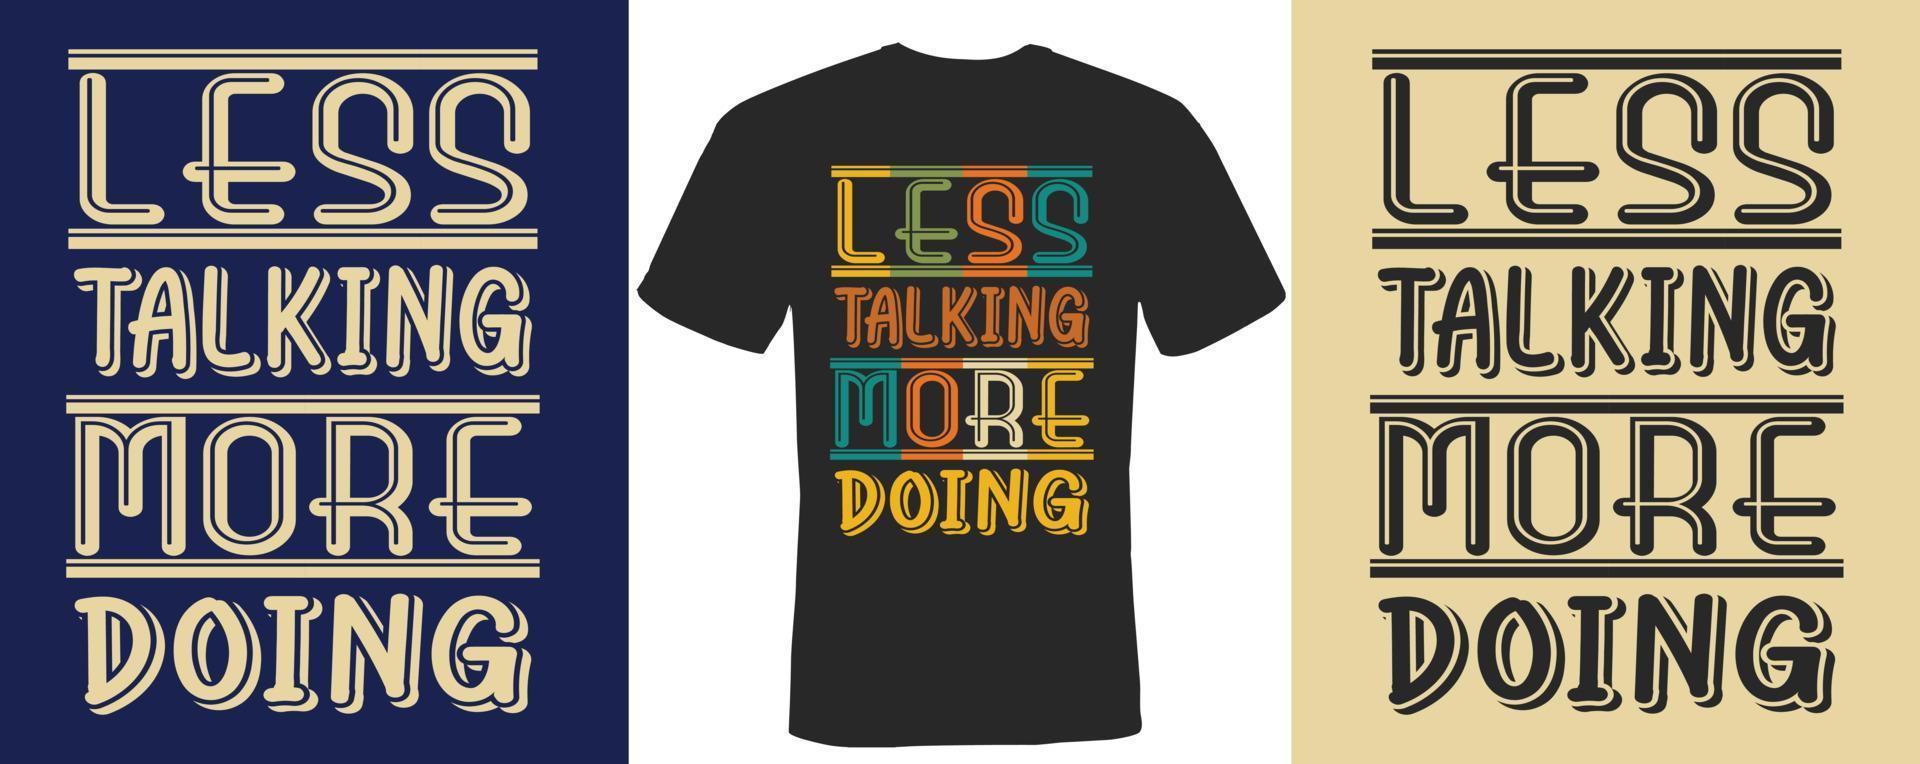 Less talking more doing t-shirt design vector